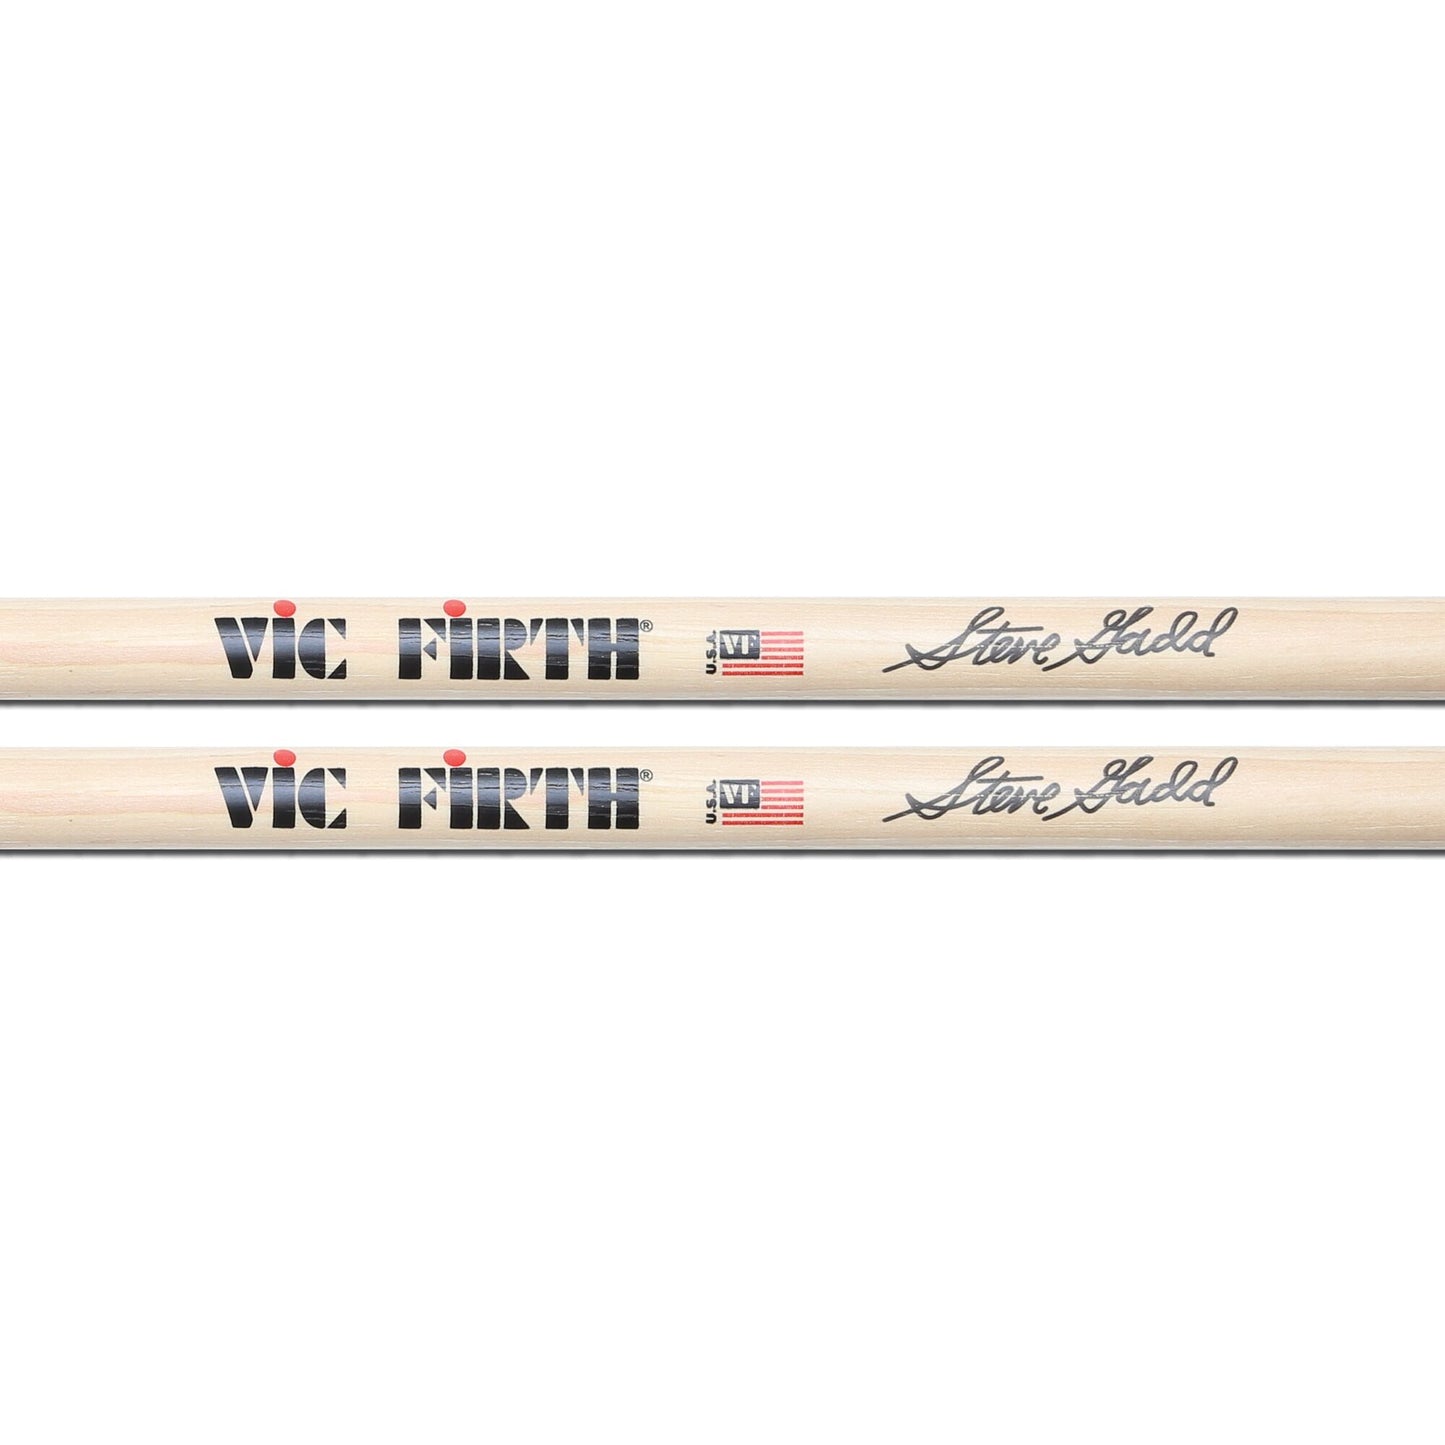 Signature Series -- Steve Gadd Natural Drumsticks